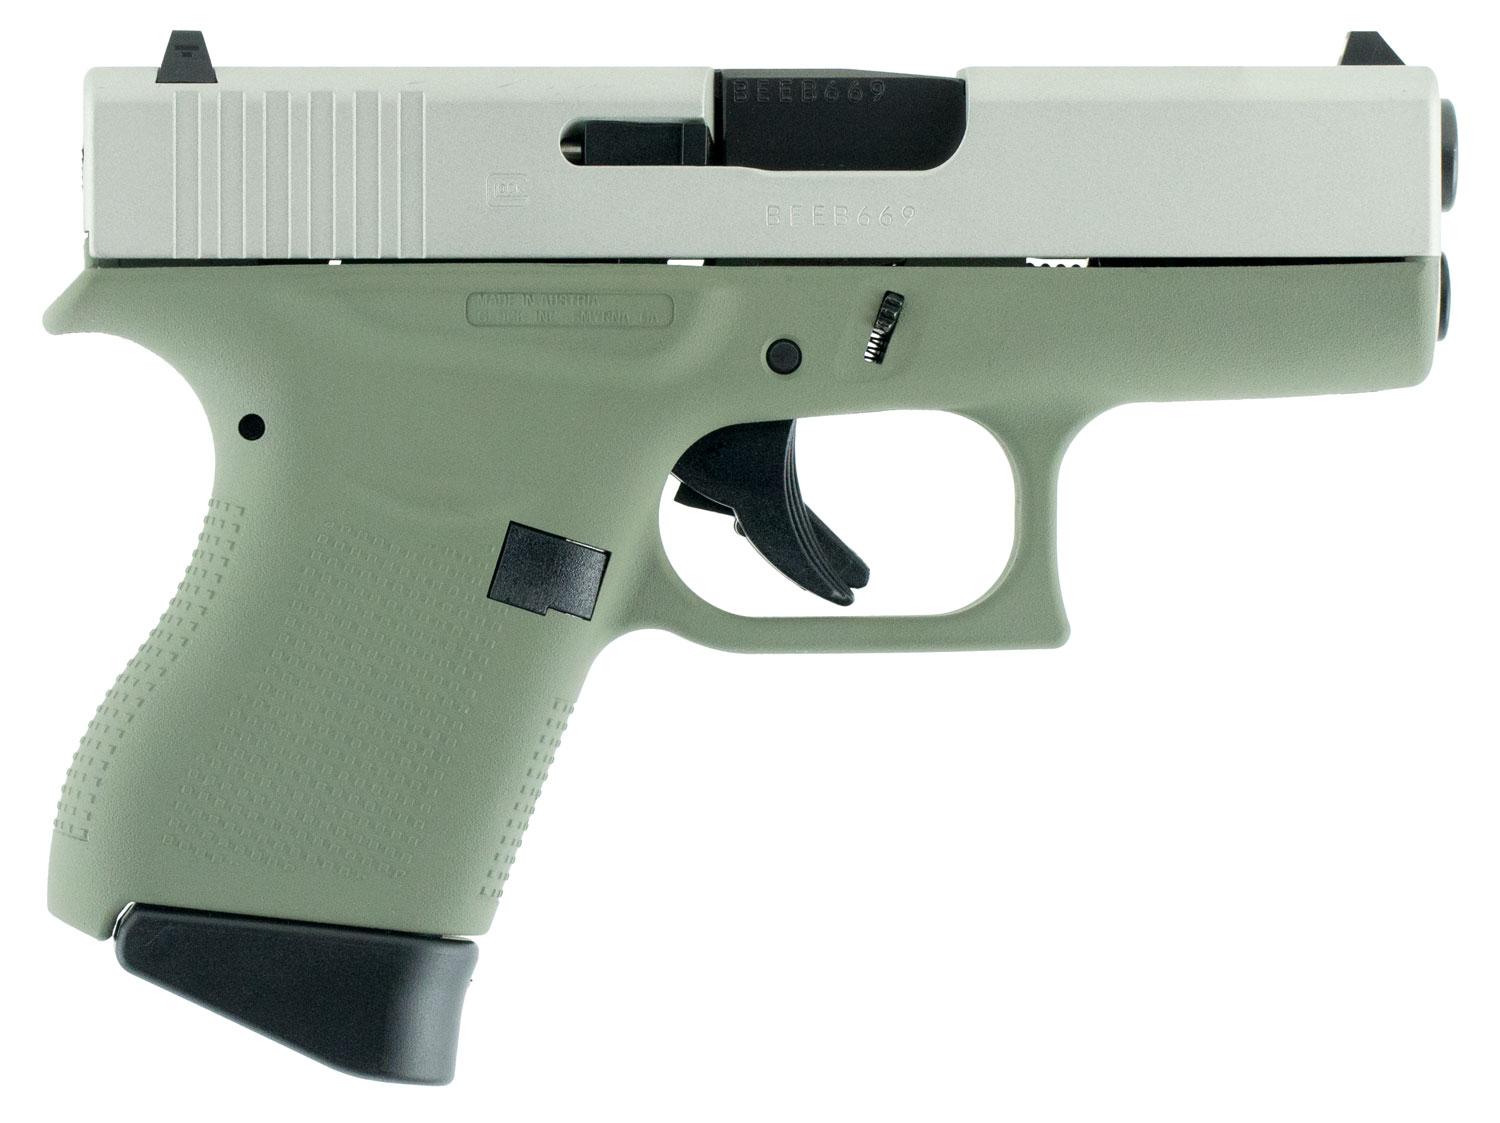 Glock G43 Pistol UI4350204, 9mm Luger, 3.39", Forest Green Poylmer Grips, Forest Green Cerakote Finish, 6 Rds